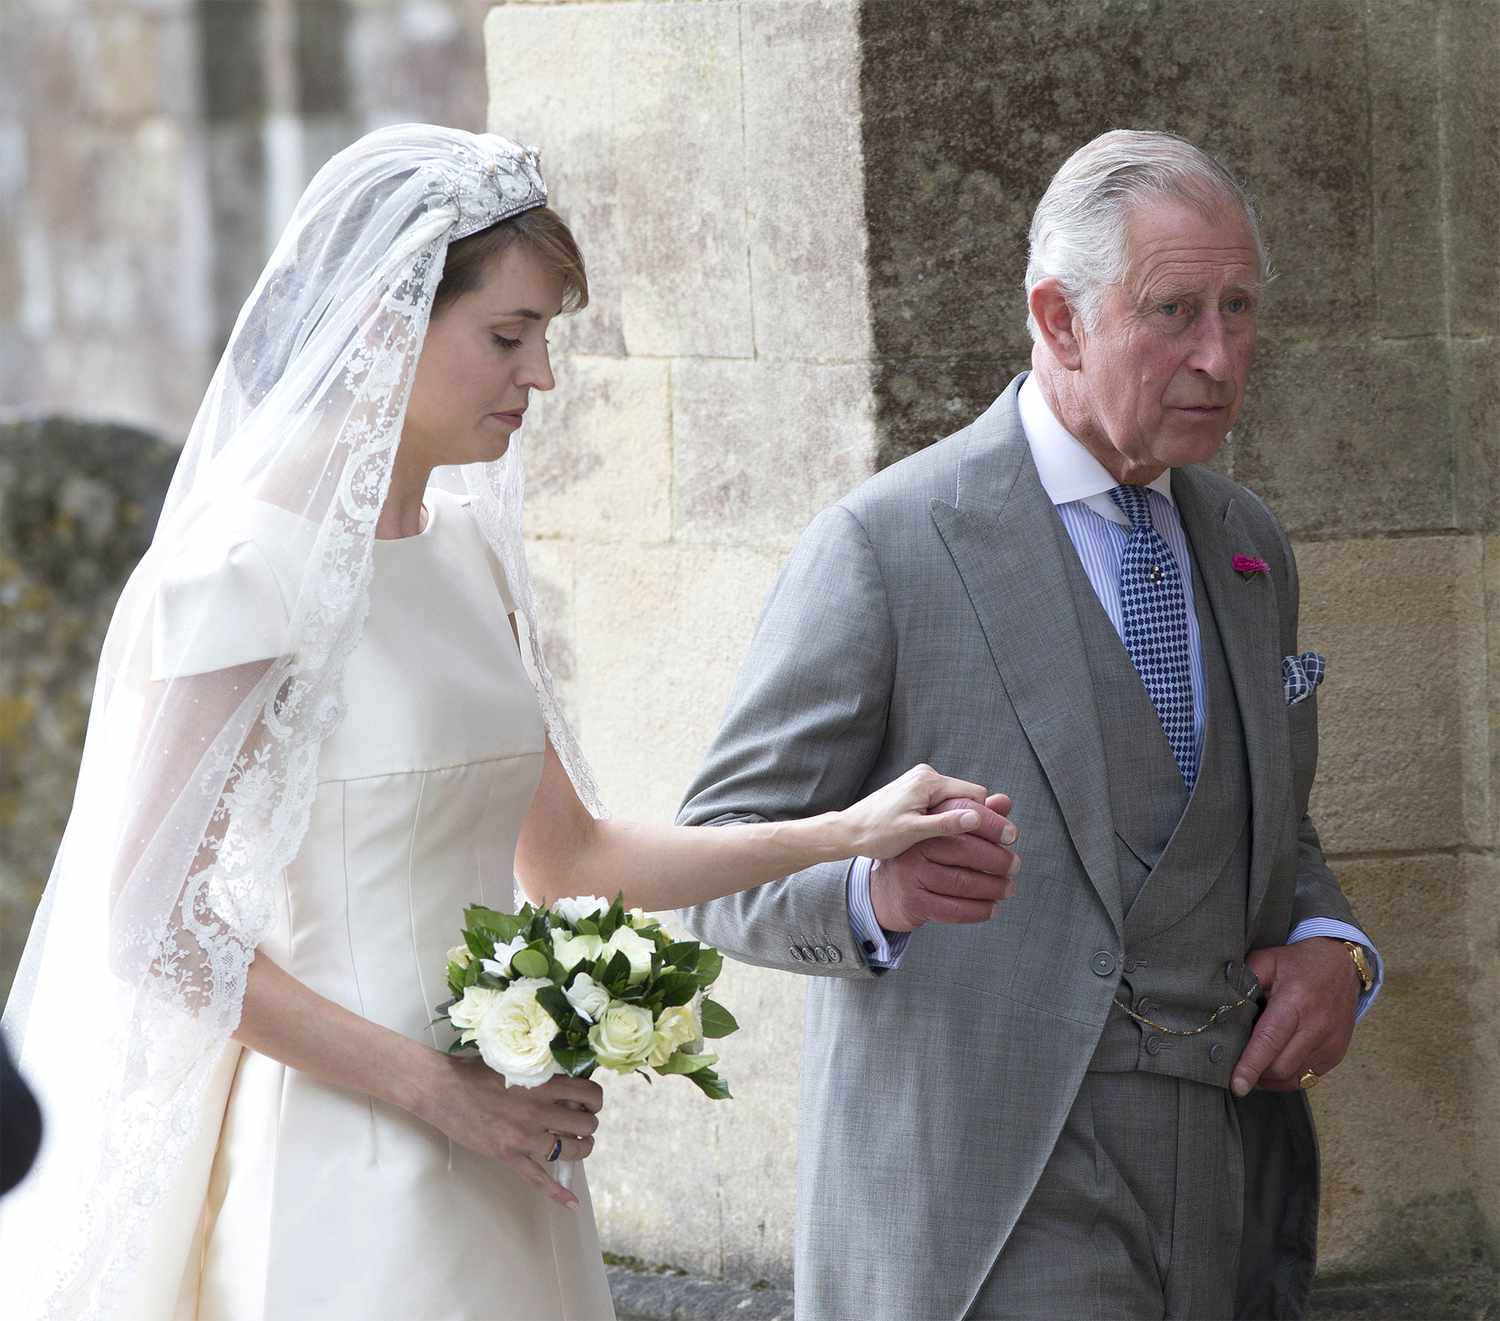 Wedding of Alexandra Knatchbull and Thomas Hooper, Romsey Abbey,  Hampshire, UK - 25 Jun 2016